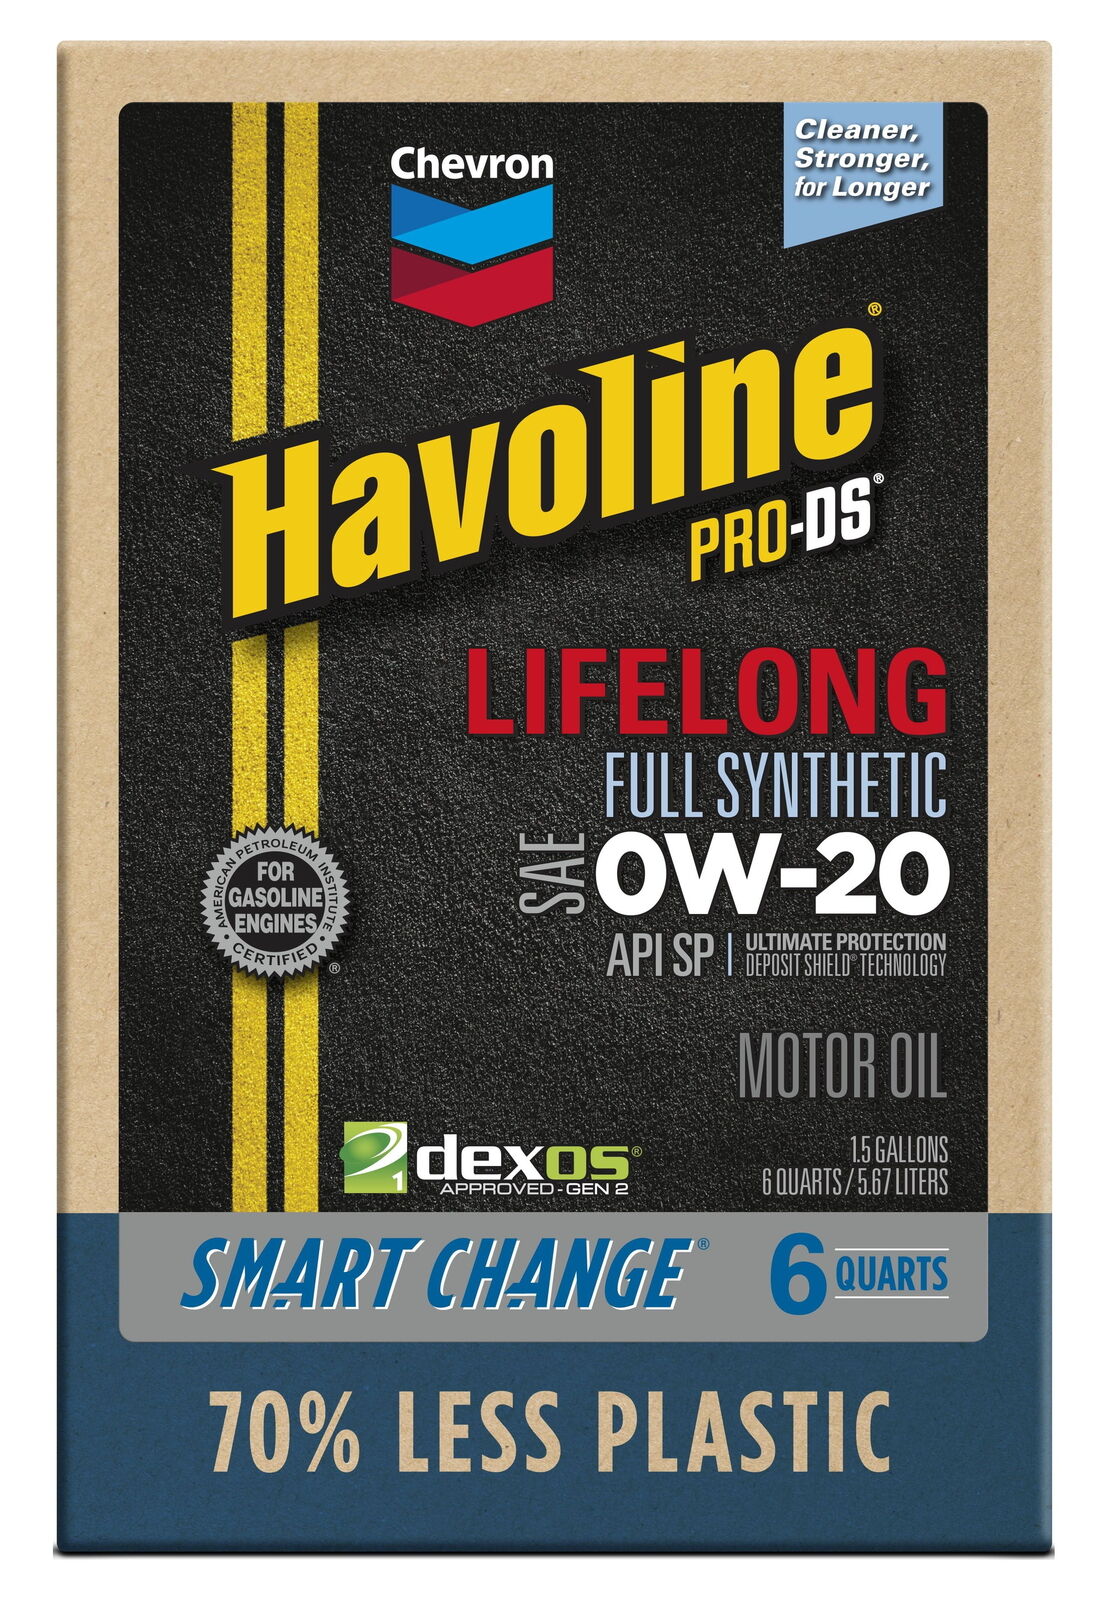 Chevron Havoline Lifelong 0W-20 Full Synthetic Motor Oil, 6 Quarts